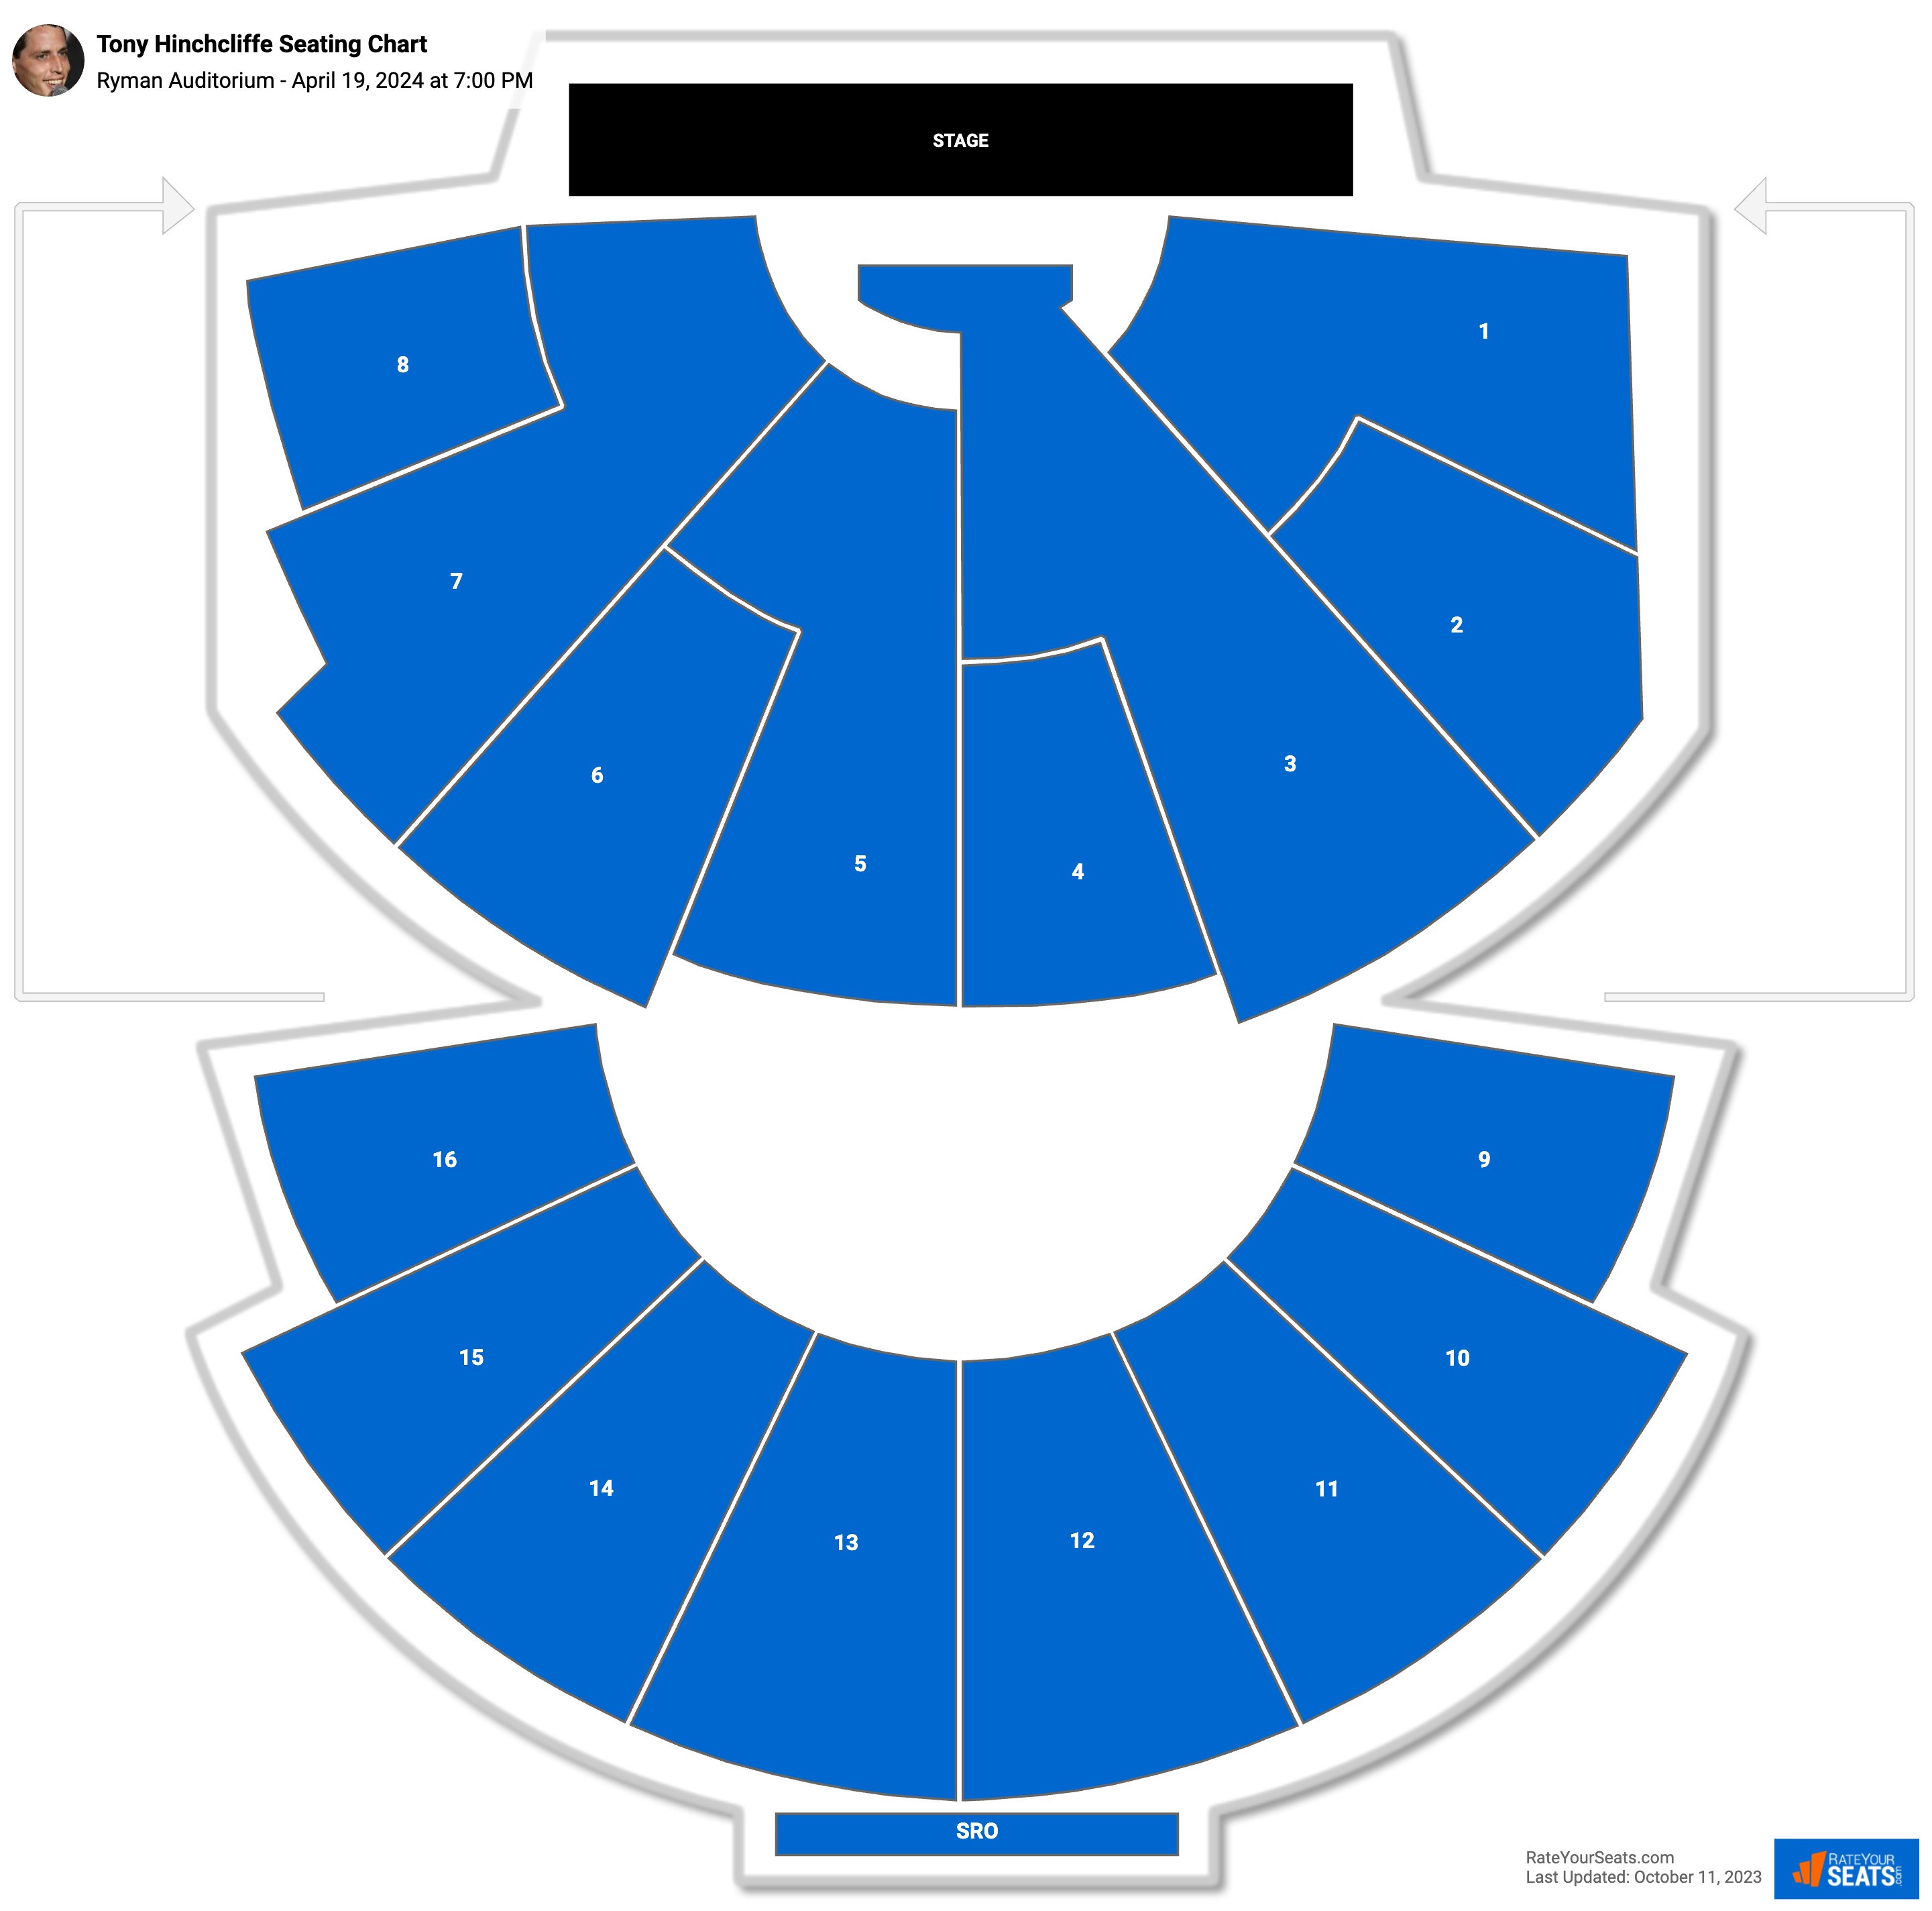 Tony Hinchcliffe seating chart Ryman Auditorium